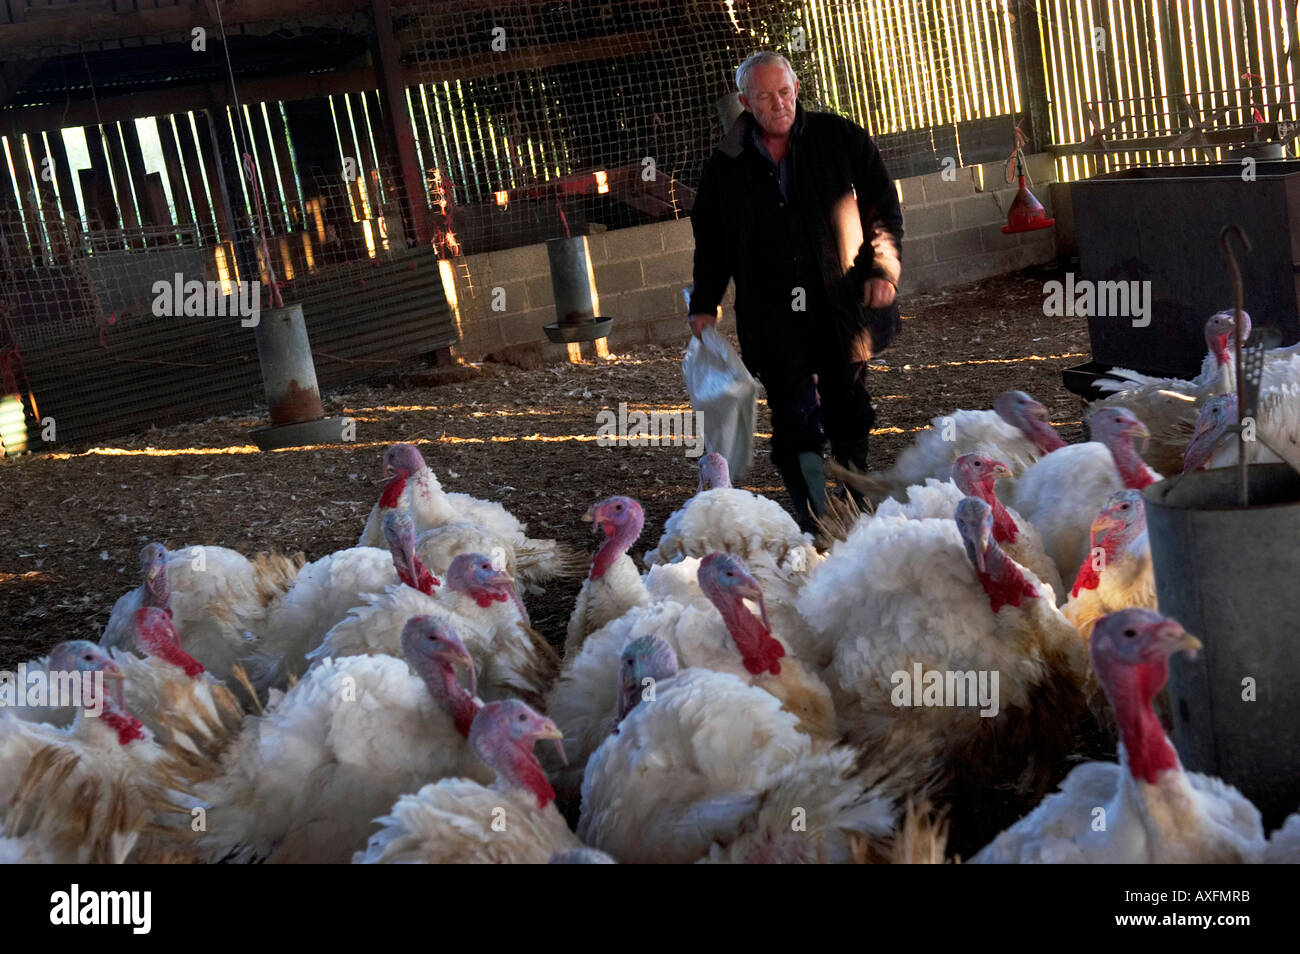 La Turchia Whilstley farm Foto Stock